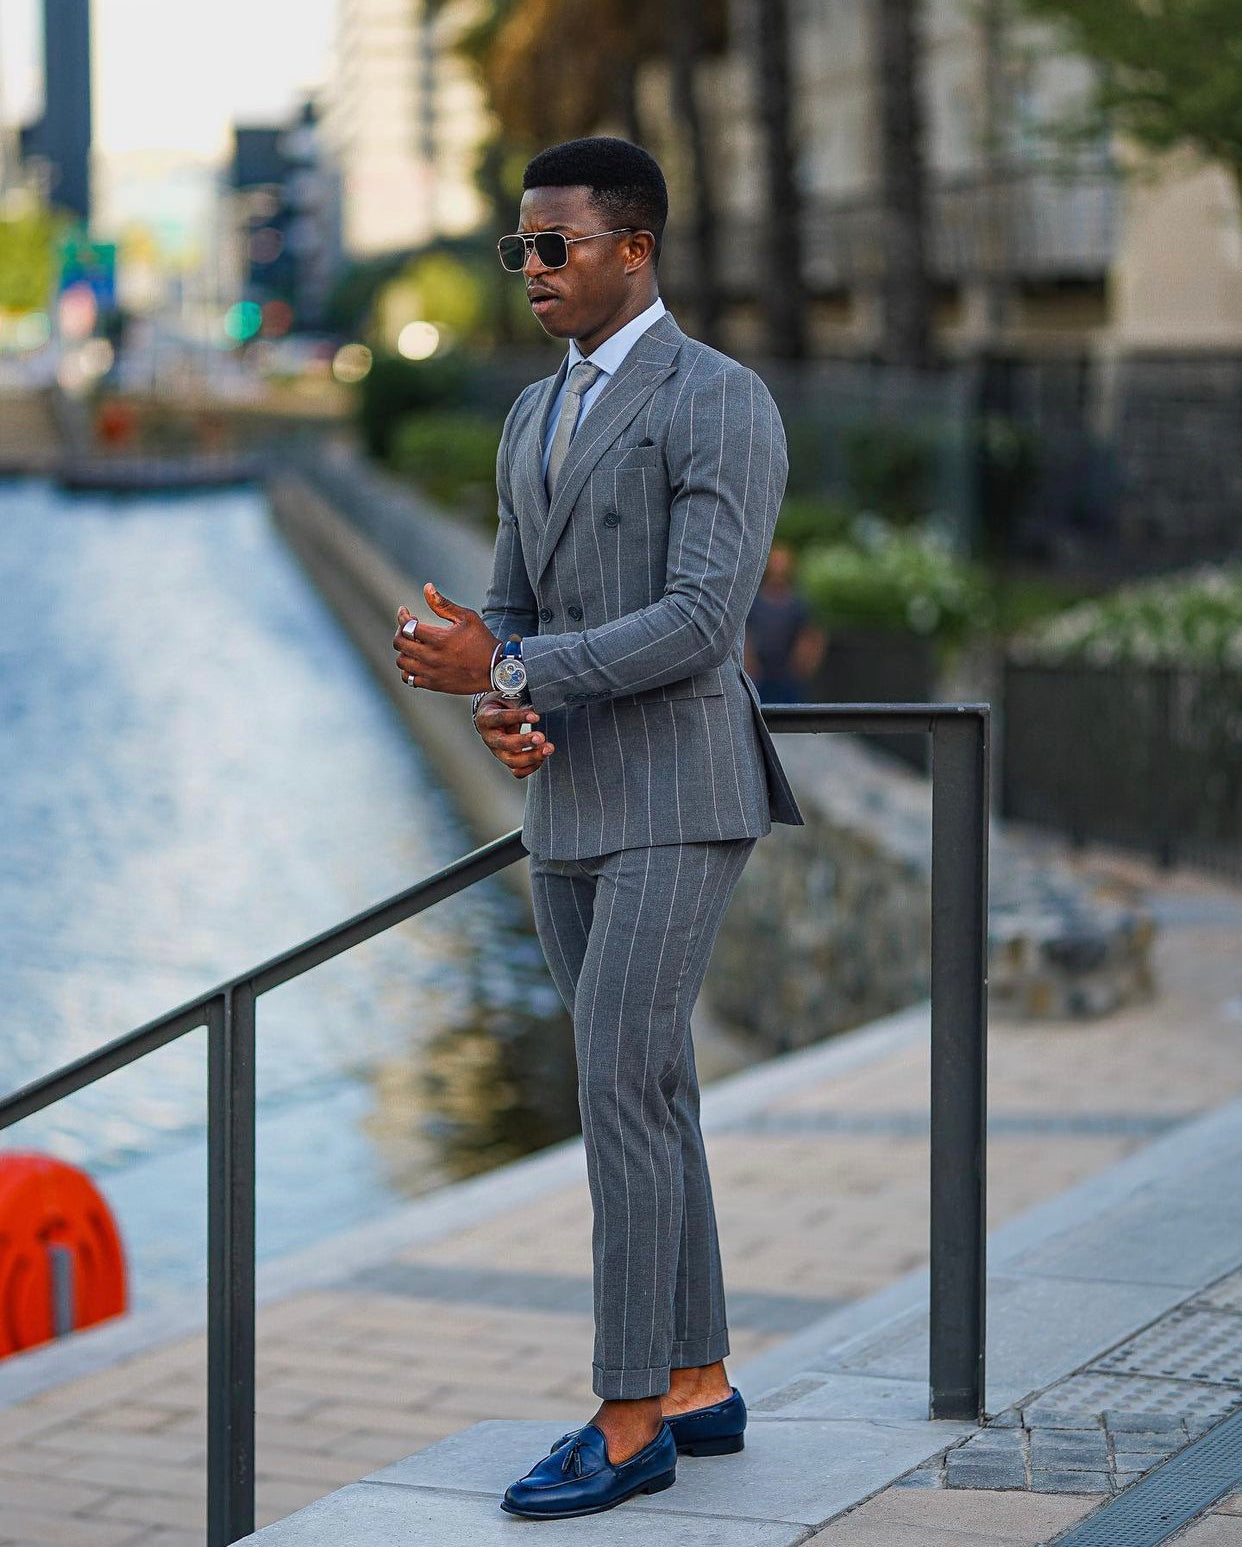 Grey Striped Suit Mens Outfit ⋆ Best Fashion Blog For Men - TheUnstitchd.com